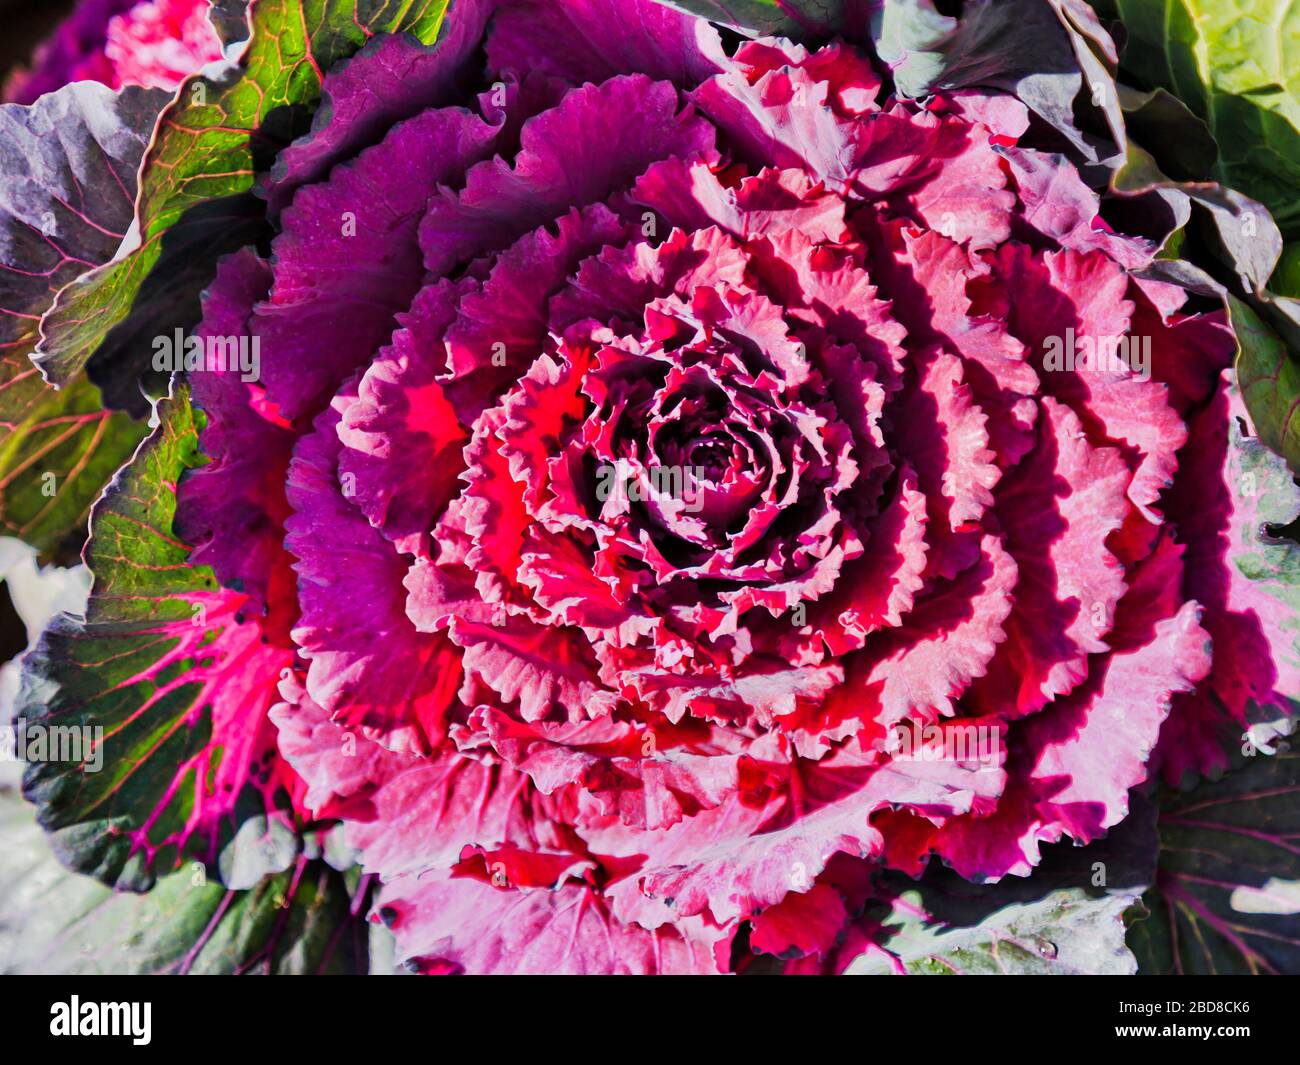 Blume aus Rotmagentakohl in Japan - Makro Draufsicht. Stockfoto